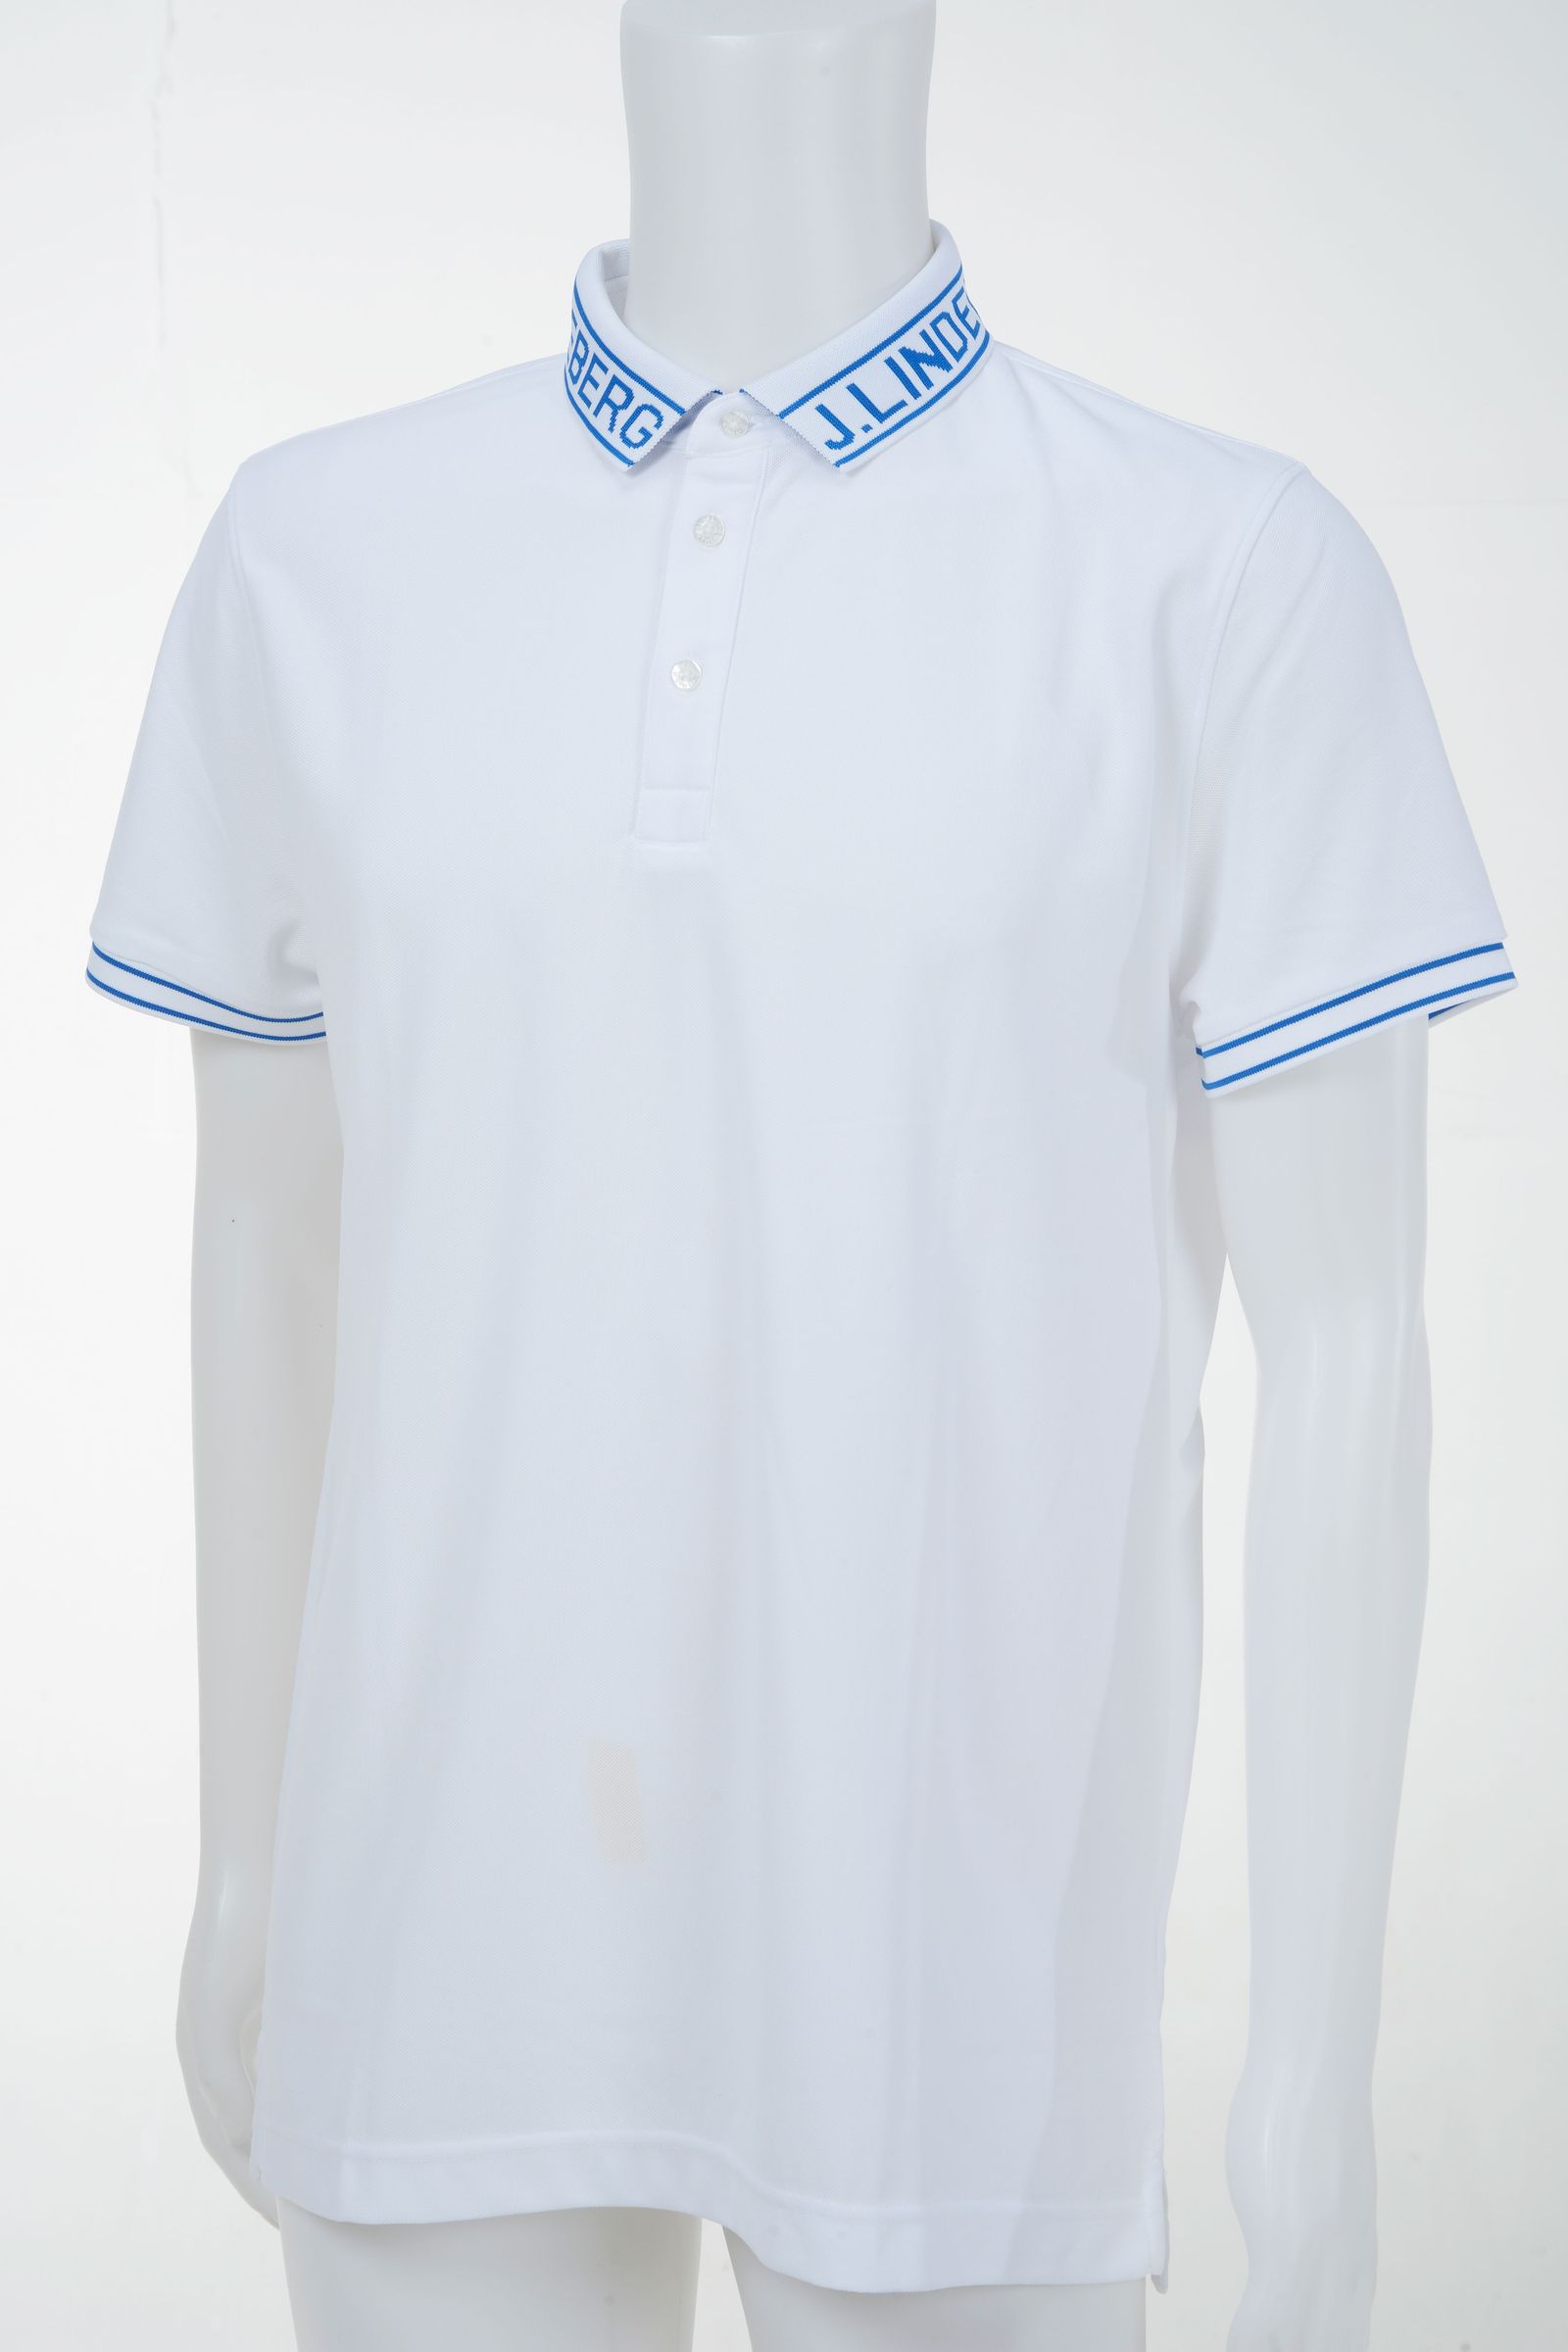 J.LINDEBERG - ゴルフウェア | 半袖ポロシャツ | リブ襟 | メンズ